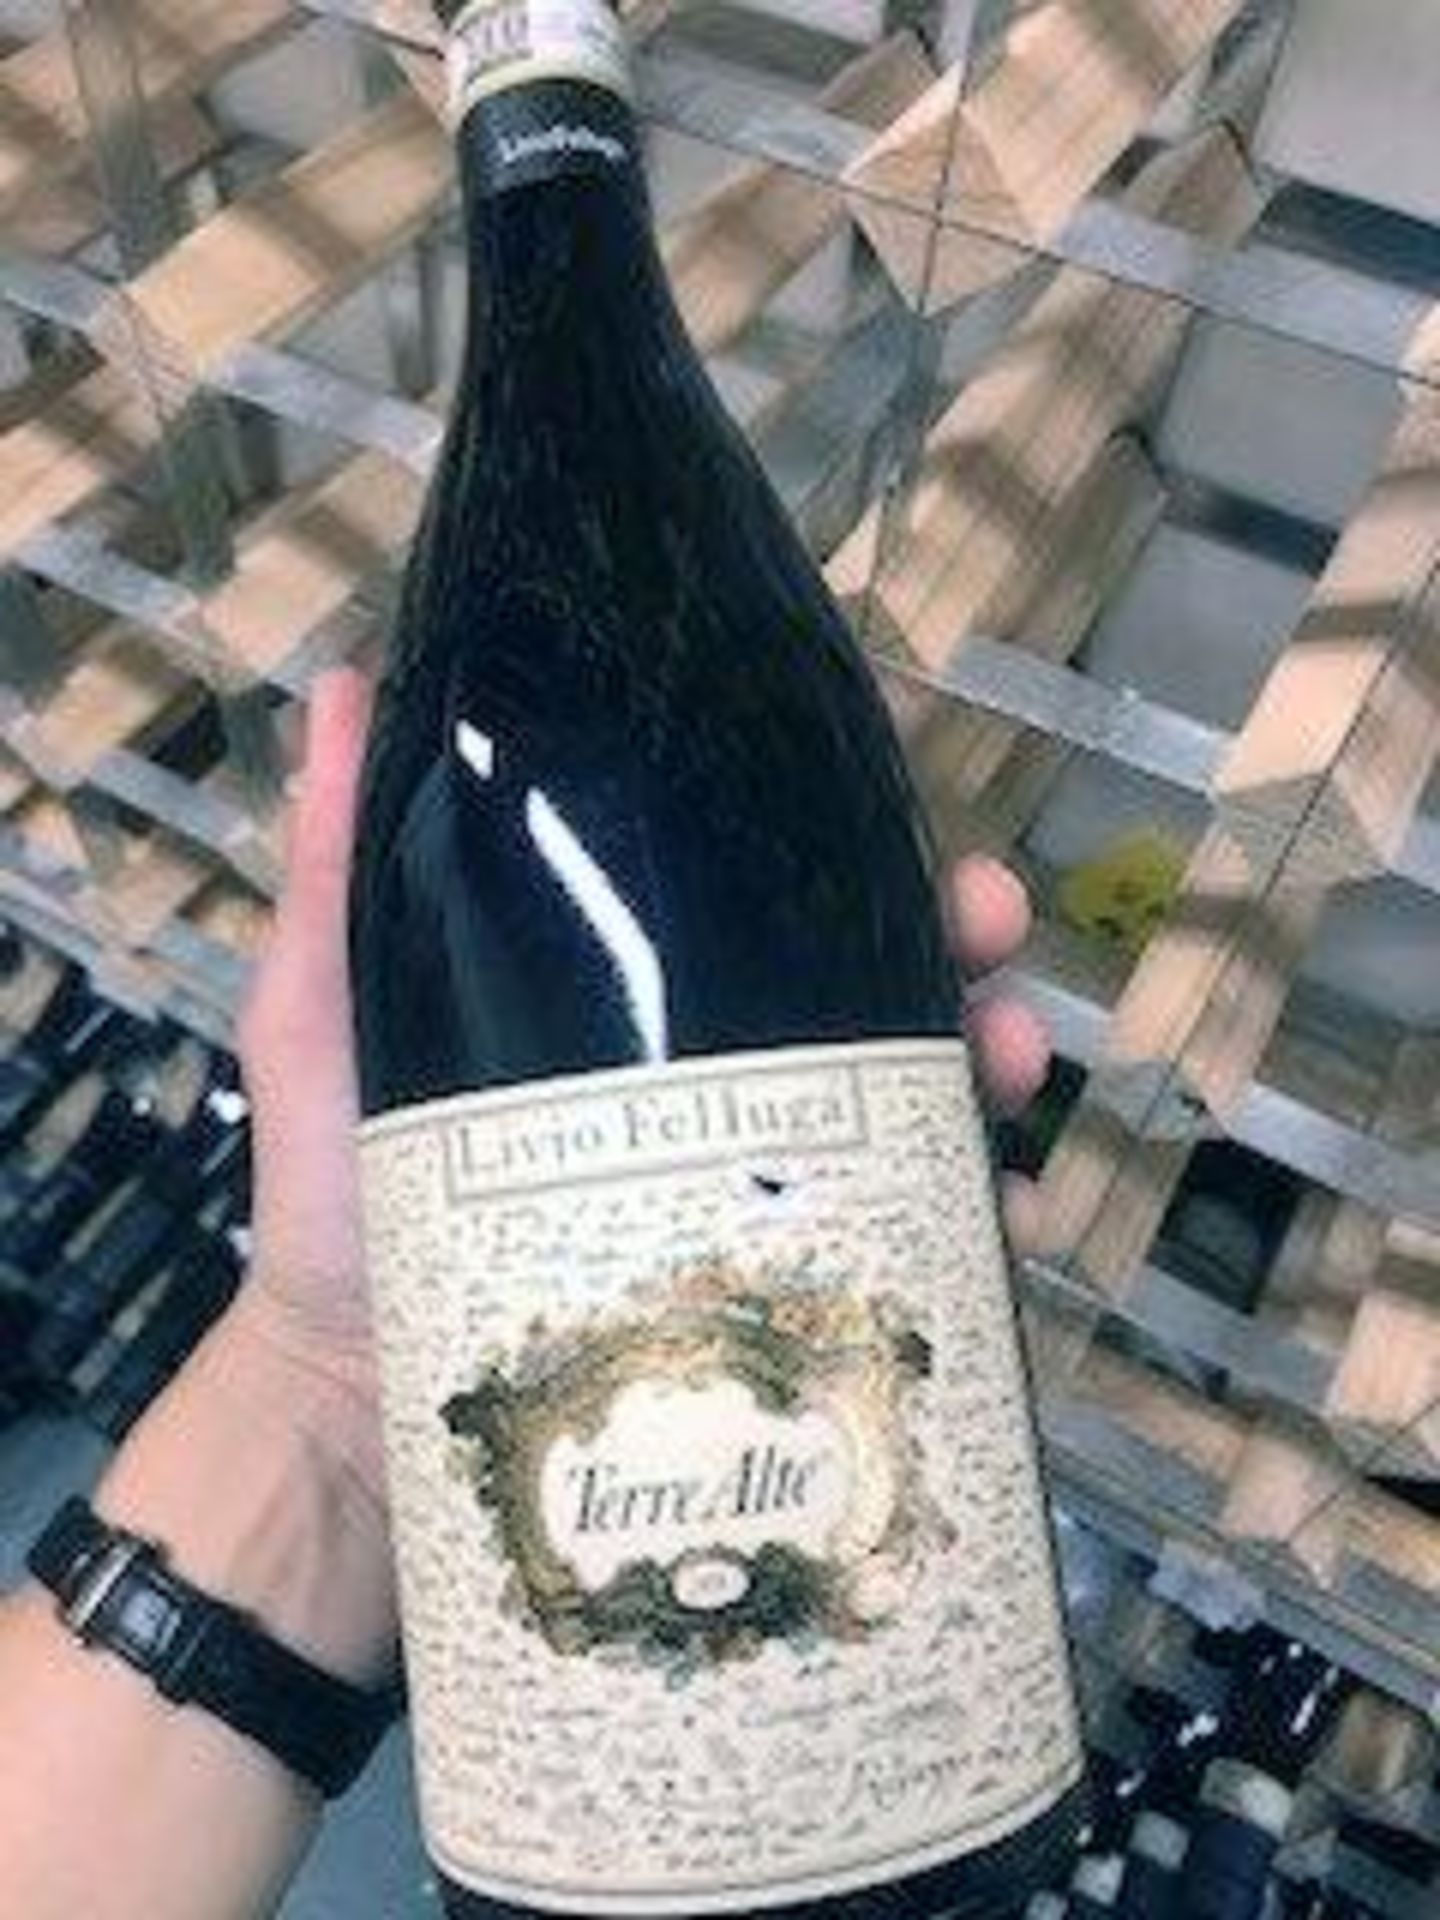 Red Wine - -Terre Alte Livio Felluga 2016 1 X Bottle Bin Number (2311)